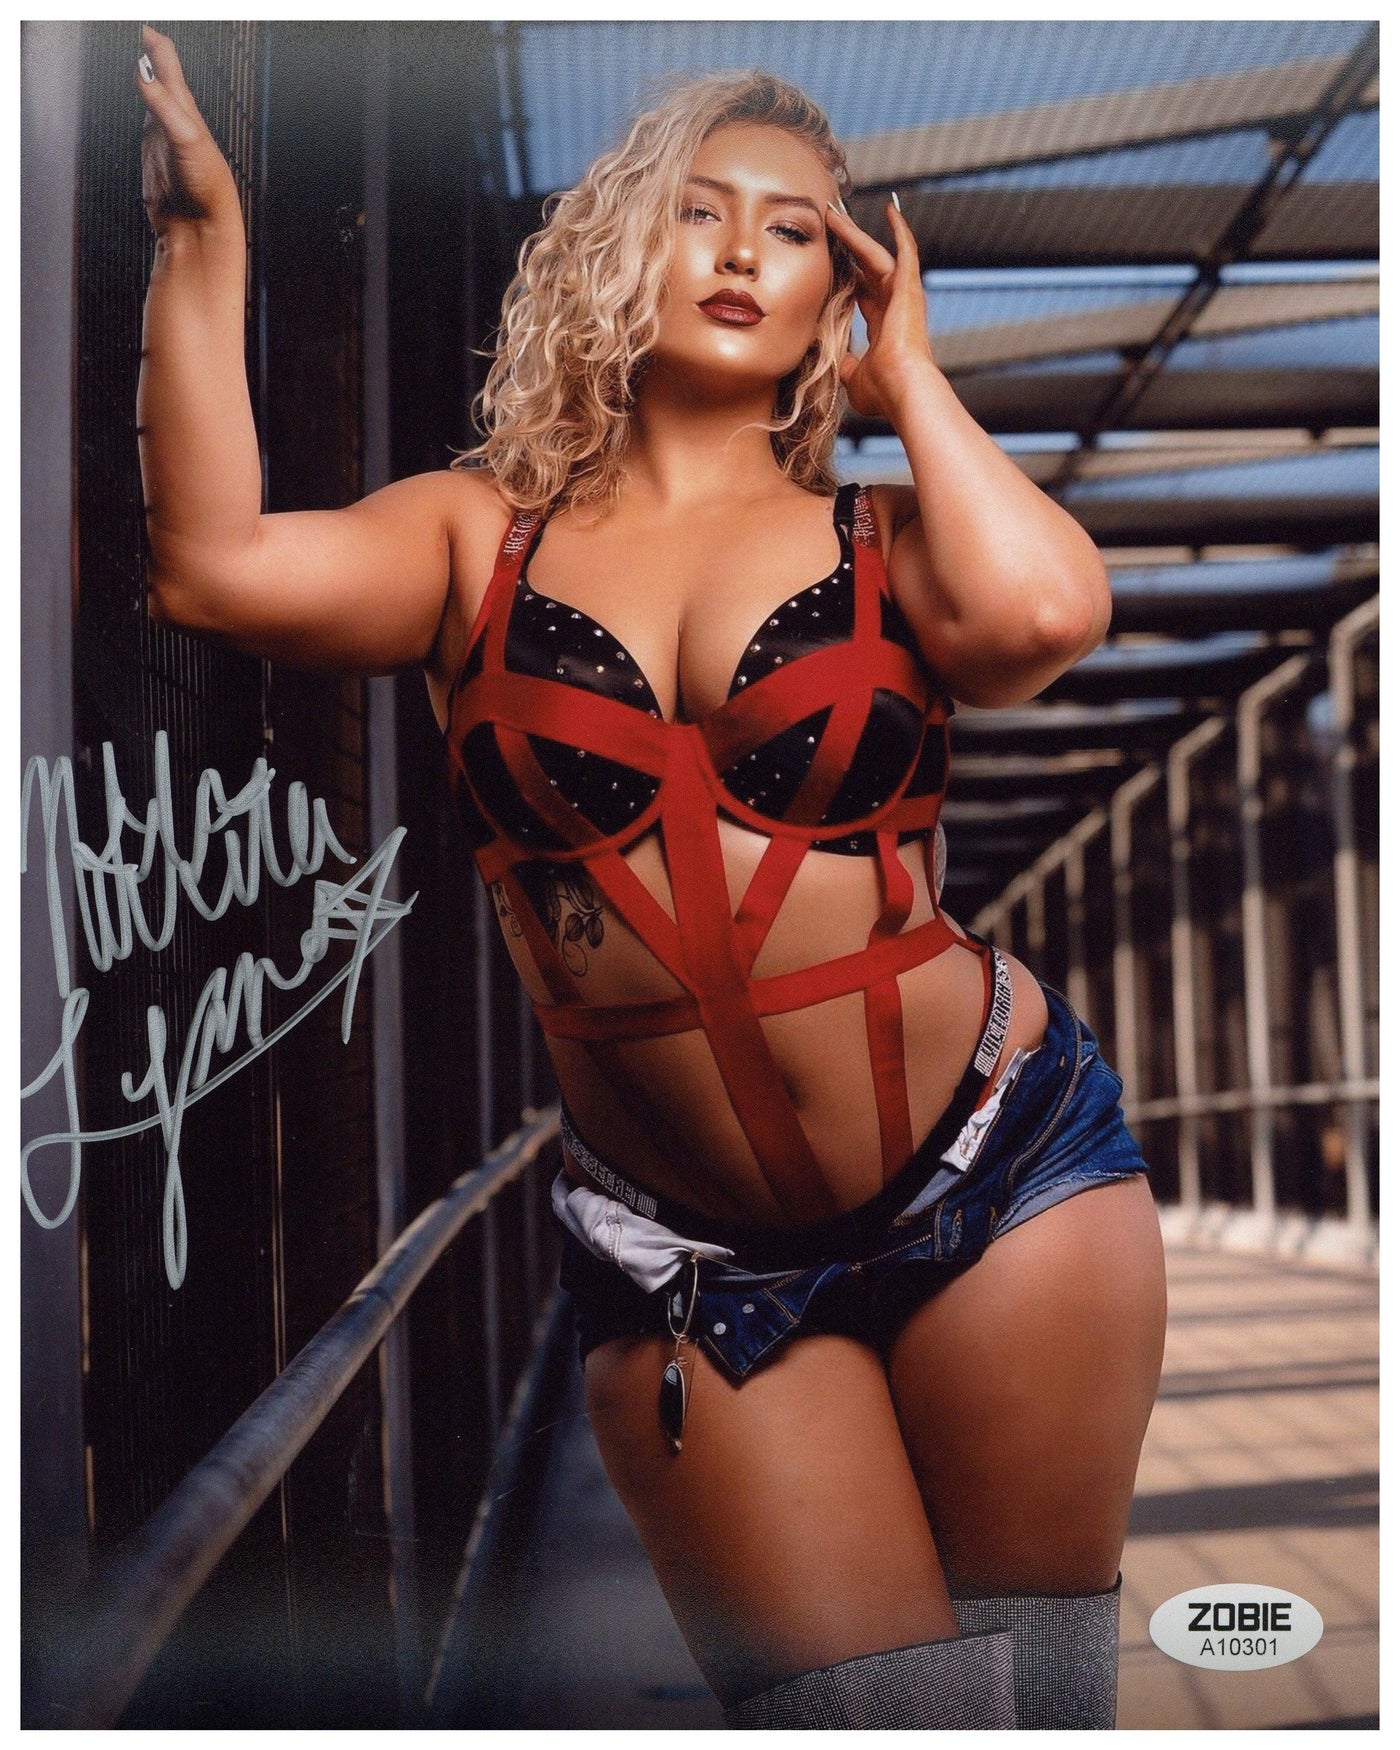 Nikkita Lyons Signed 8x10 Photo NXT WWE Autographed Zobie COA #3